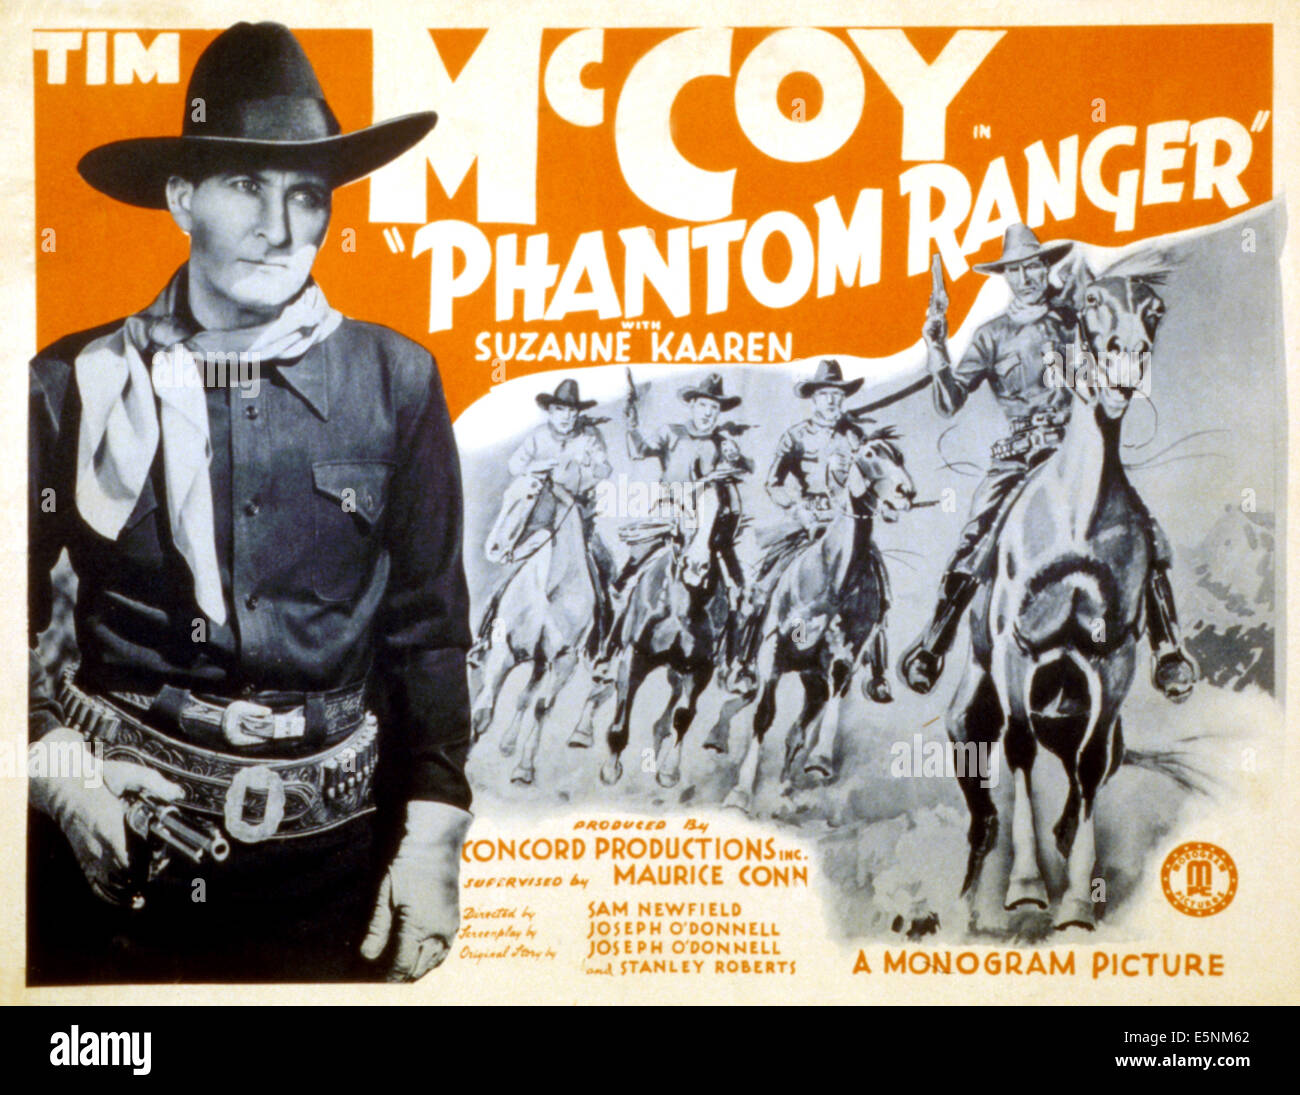 Il PHANTOM RANGER, Tim McCoy, 1938 Foto Stock